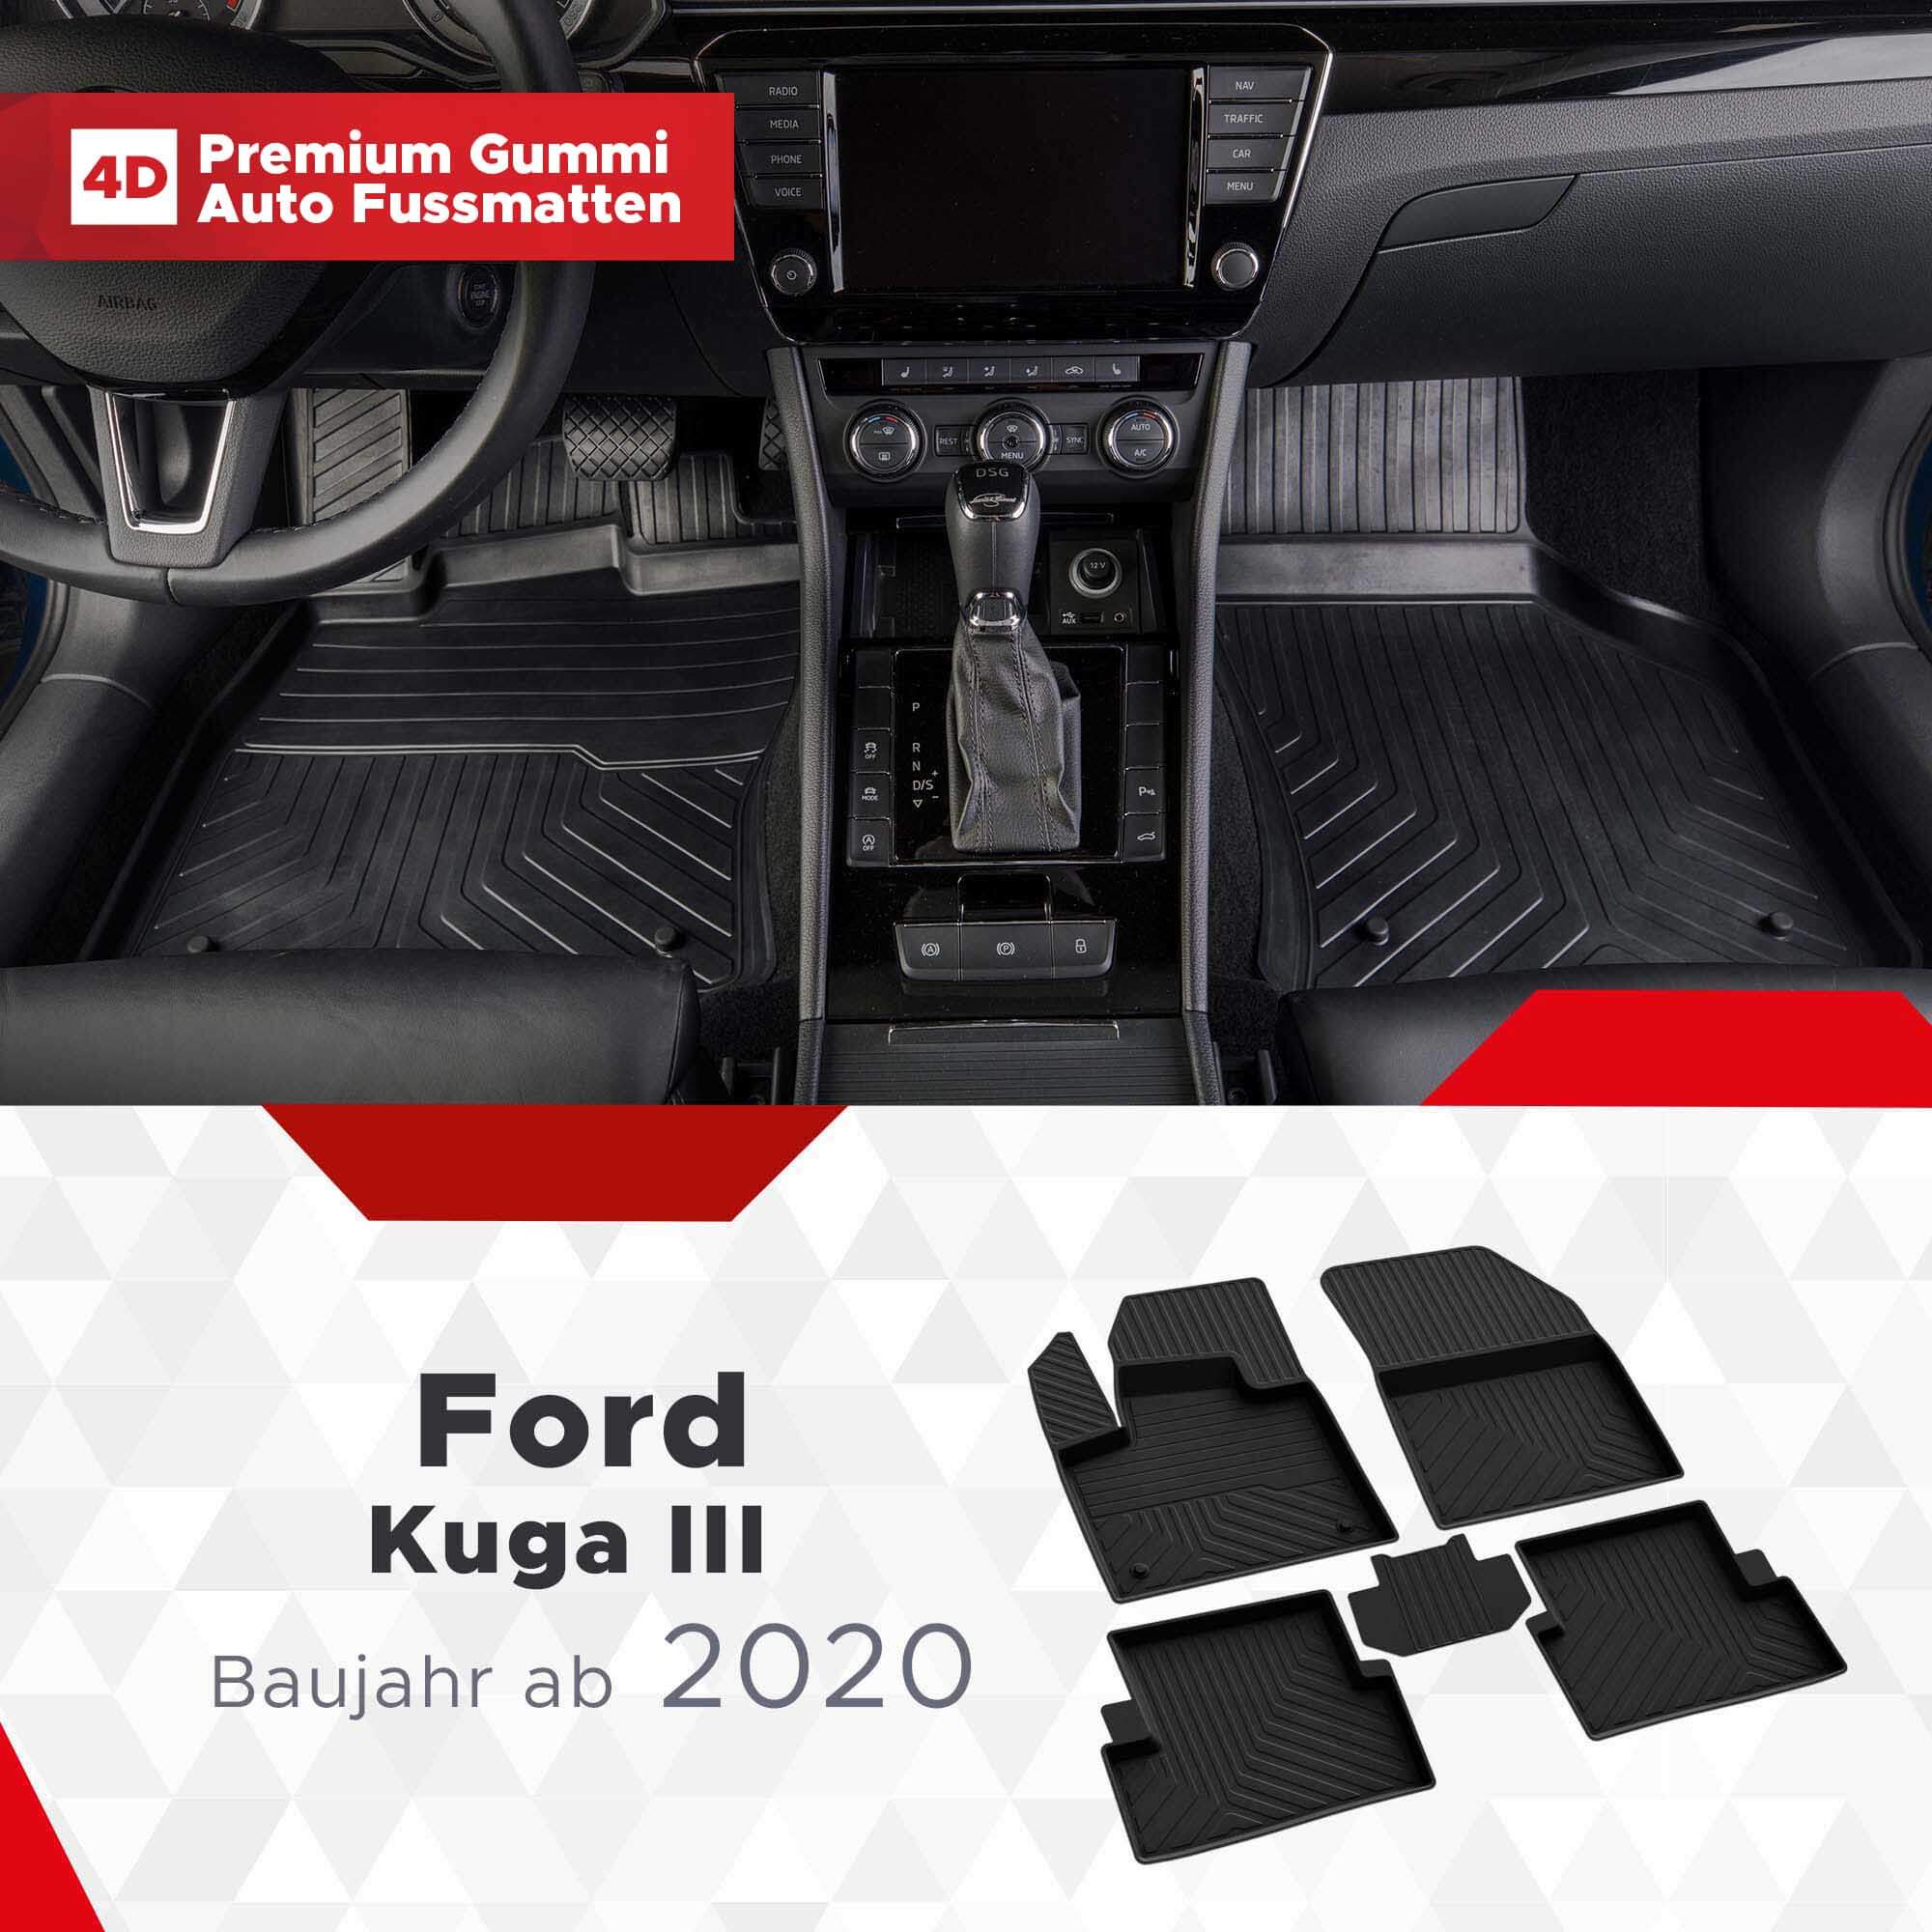 https://fussmattenprofi.com/wp-content/uploads/2022/09/AutoFussmatten-Fussmattenprofi-Ford-Kuga-III-Baujahr-ab-2020.jpg